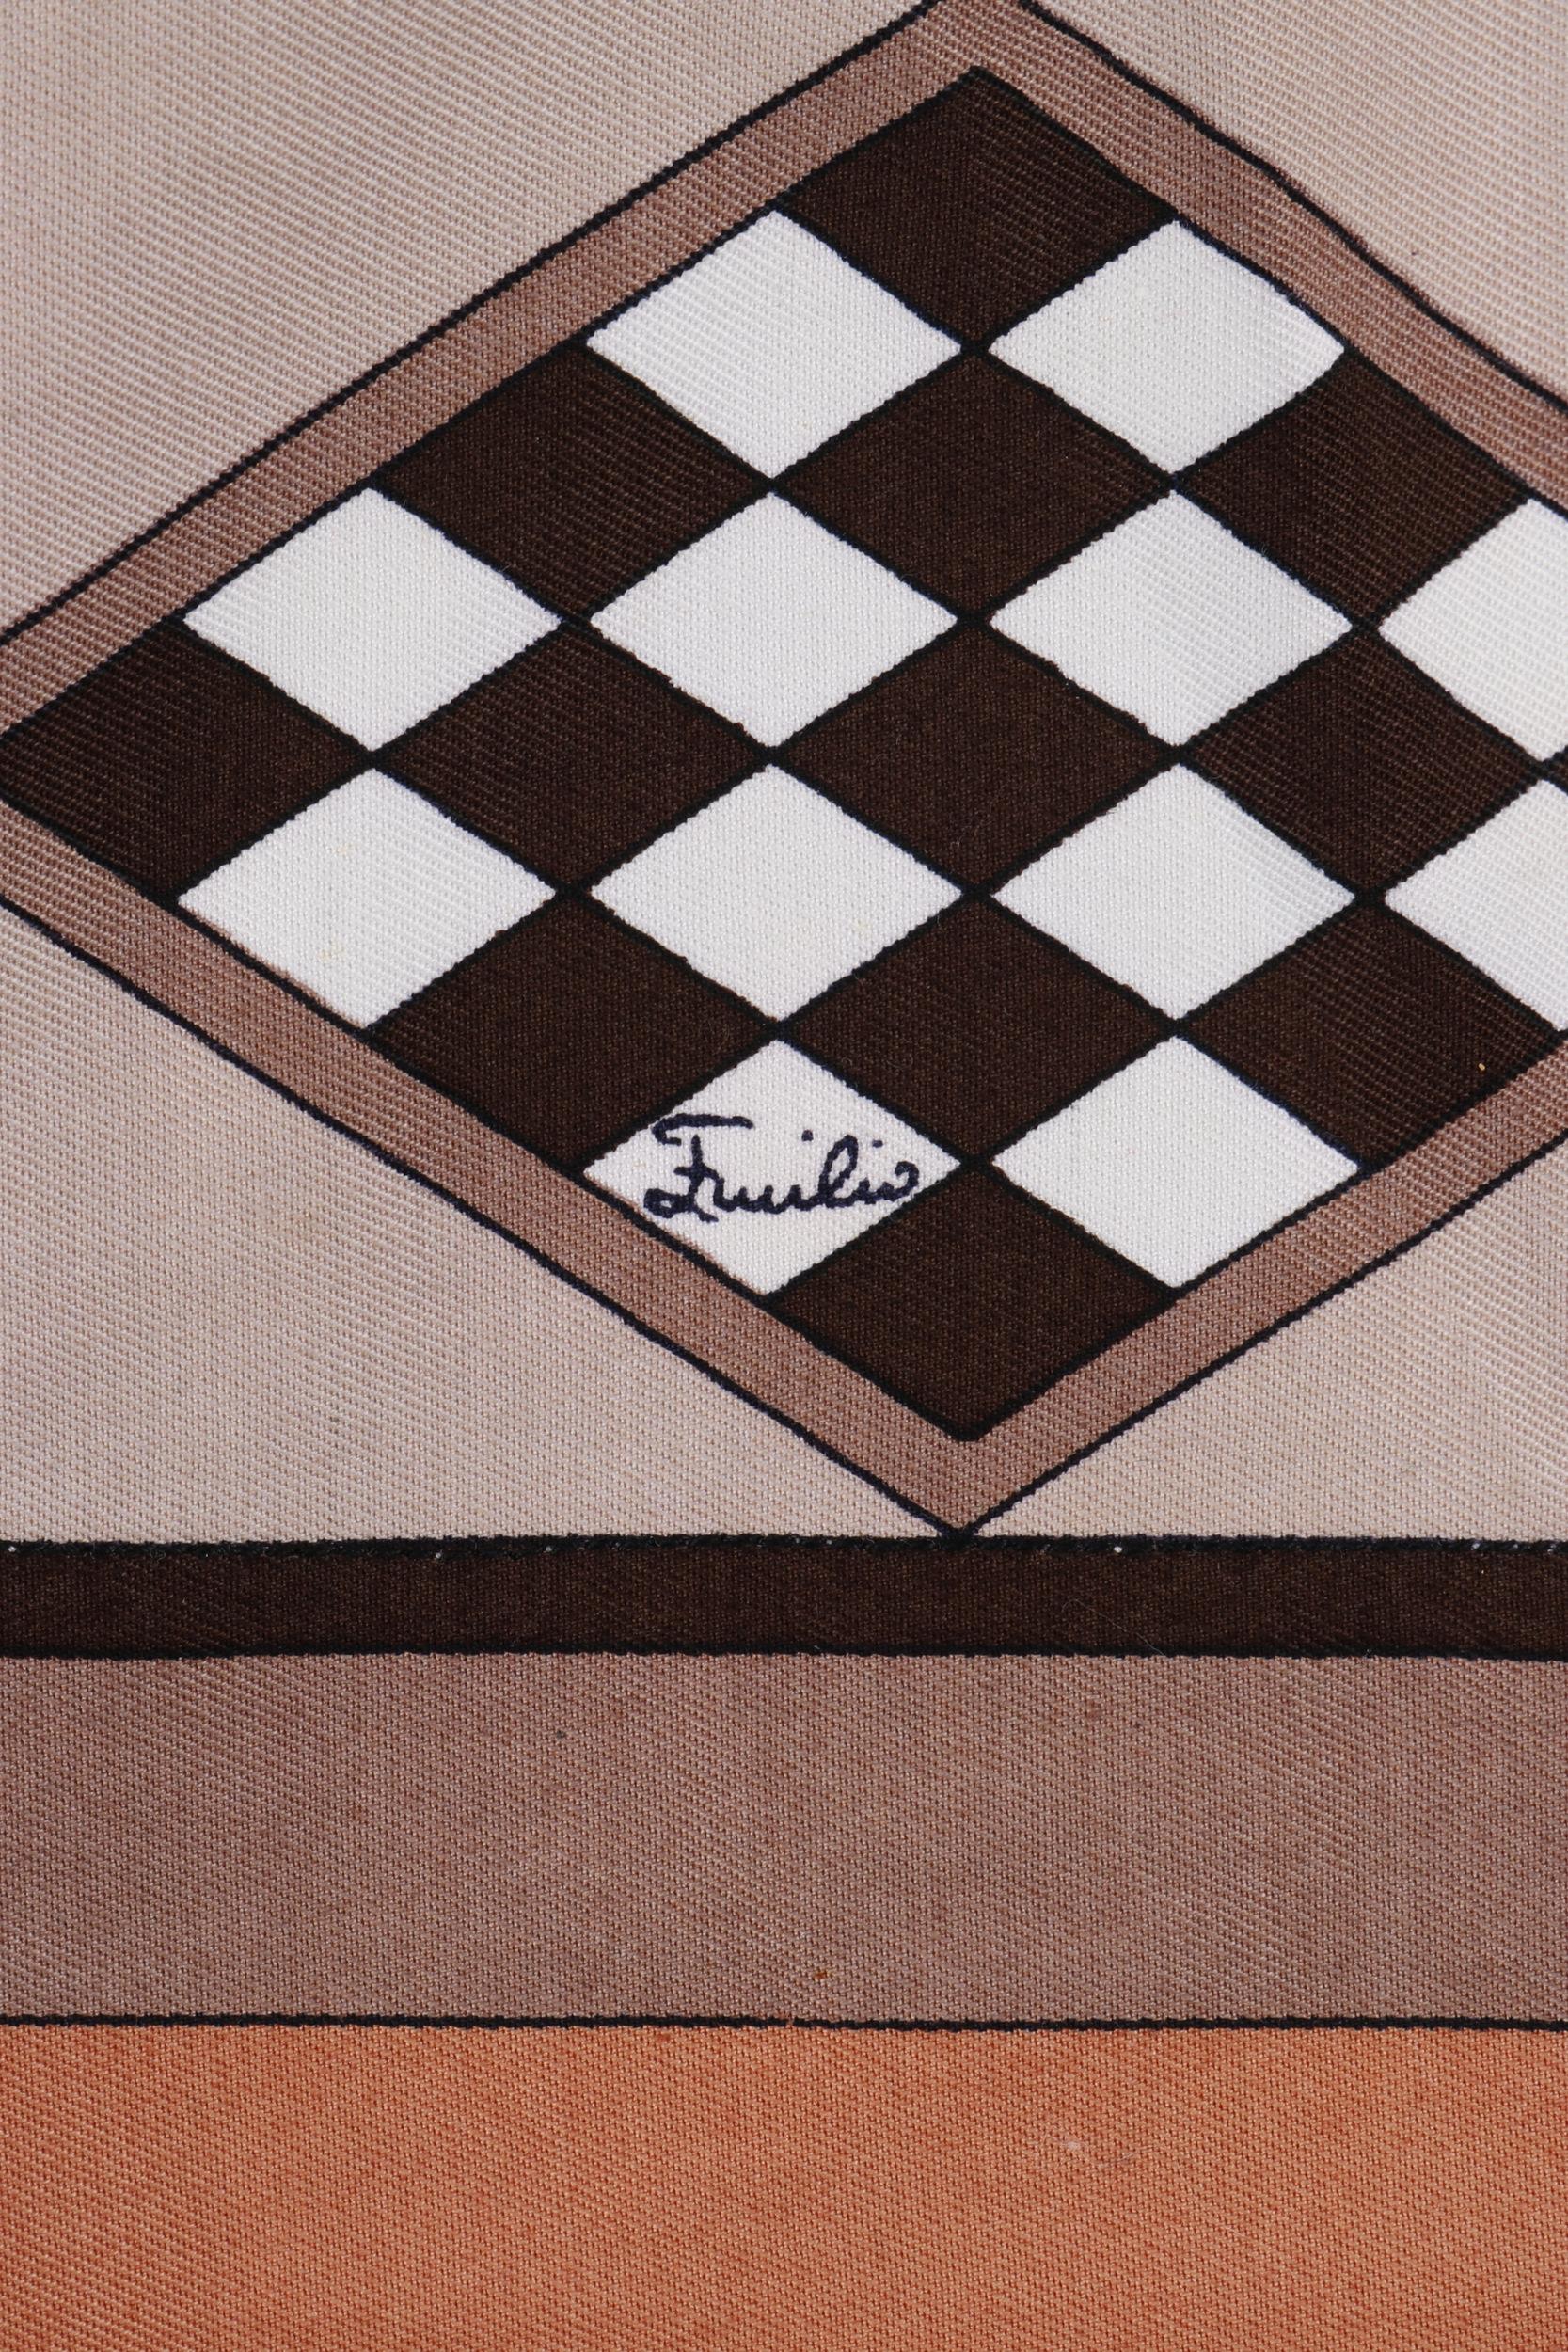 Women's EMILIO PUCCI c.1970’s Brown White Checkered Geometric Shape 2 Pc Bikini Swimsuit